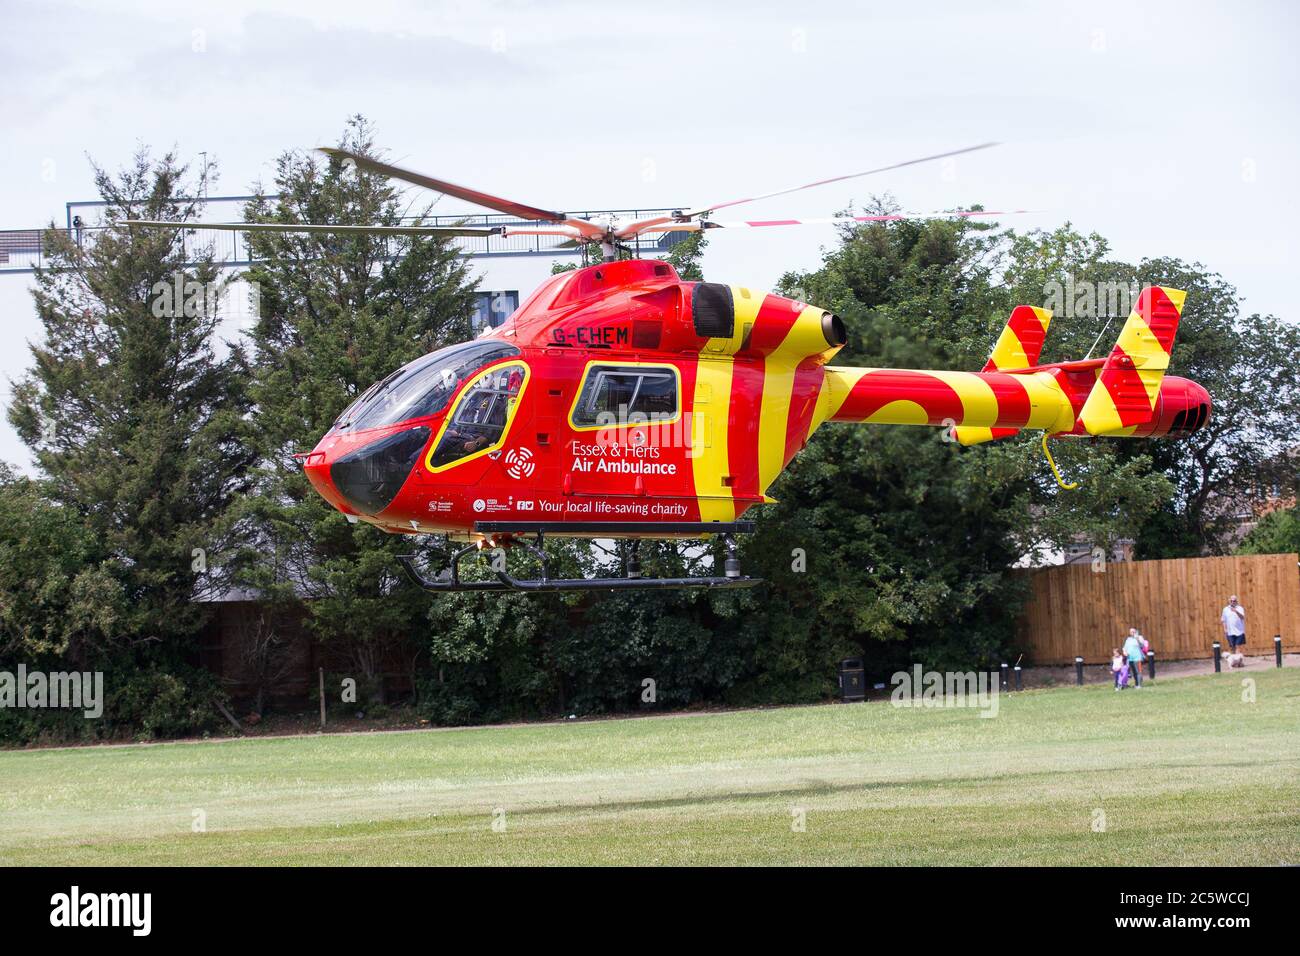 Air Ambulance, Essex e Herts, G-EHEM Foto Stock